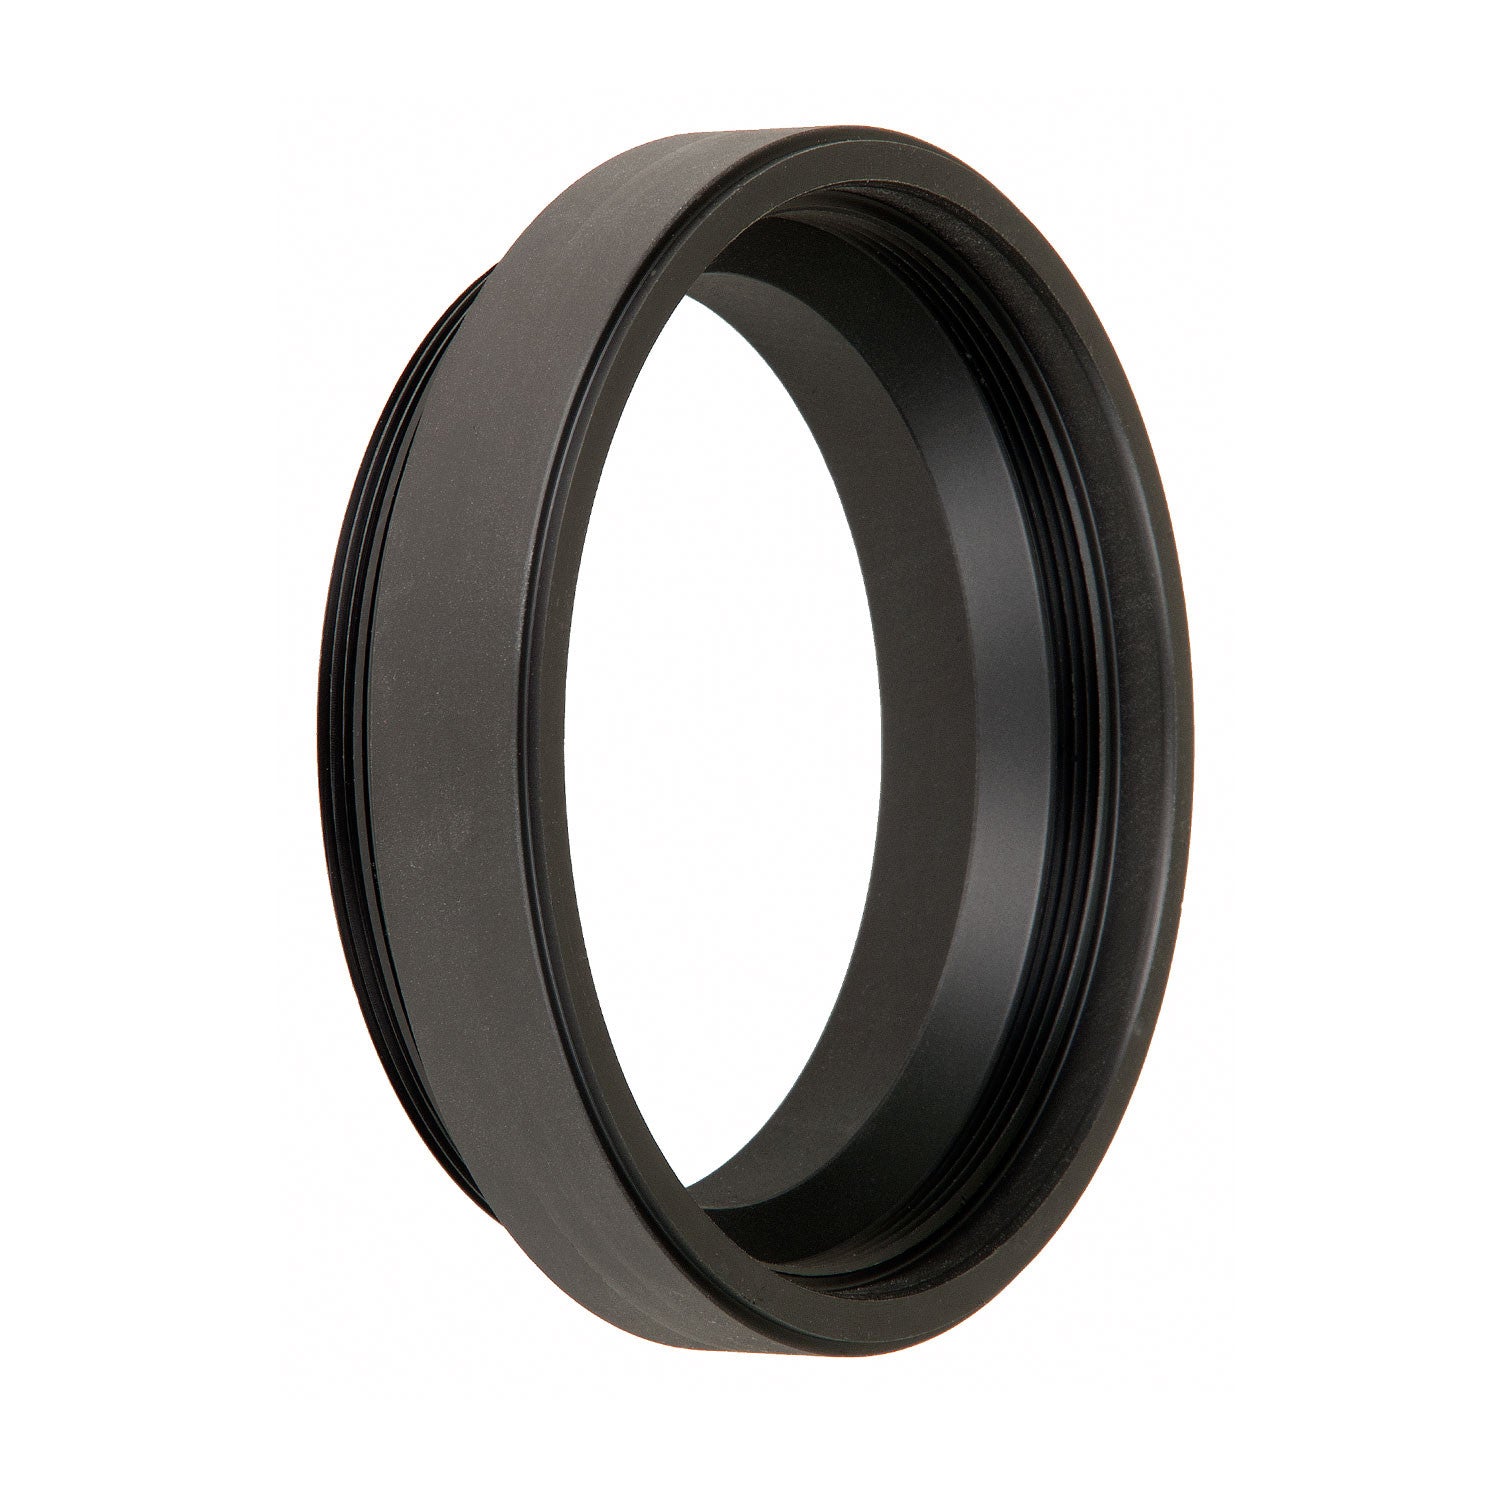 Modular 0.75 Inch Extension Ring